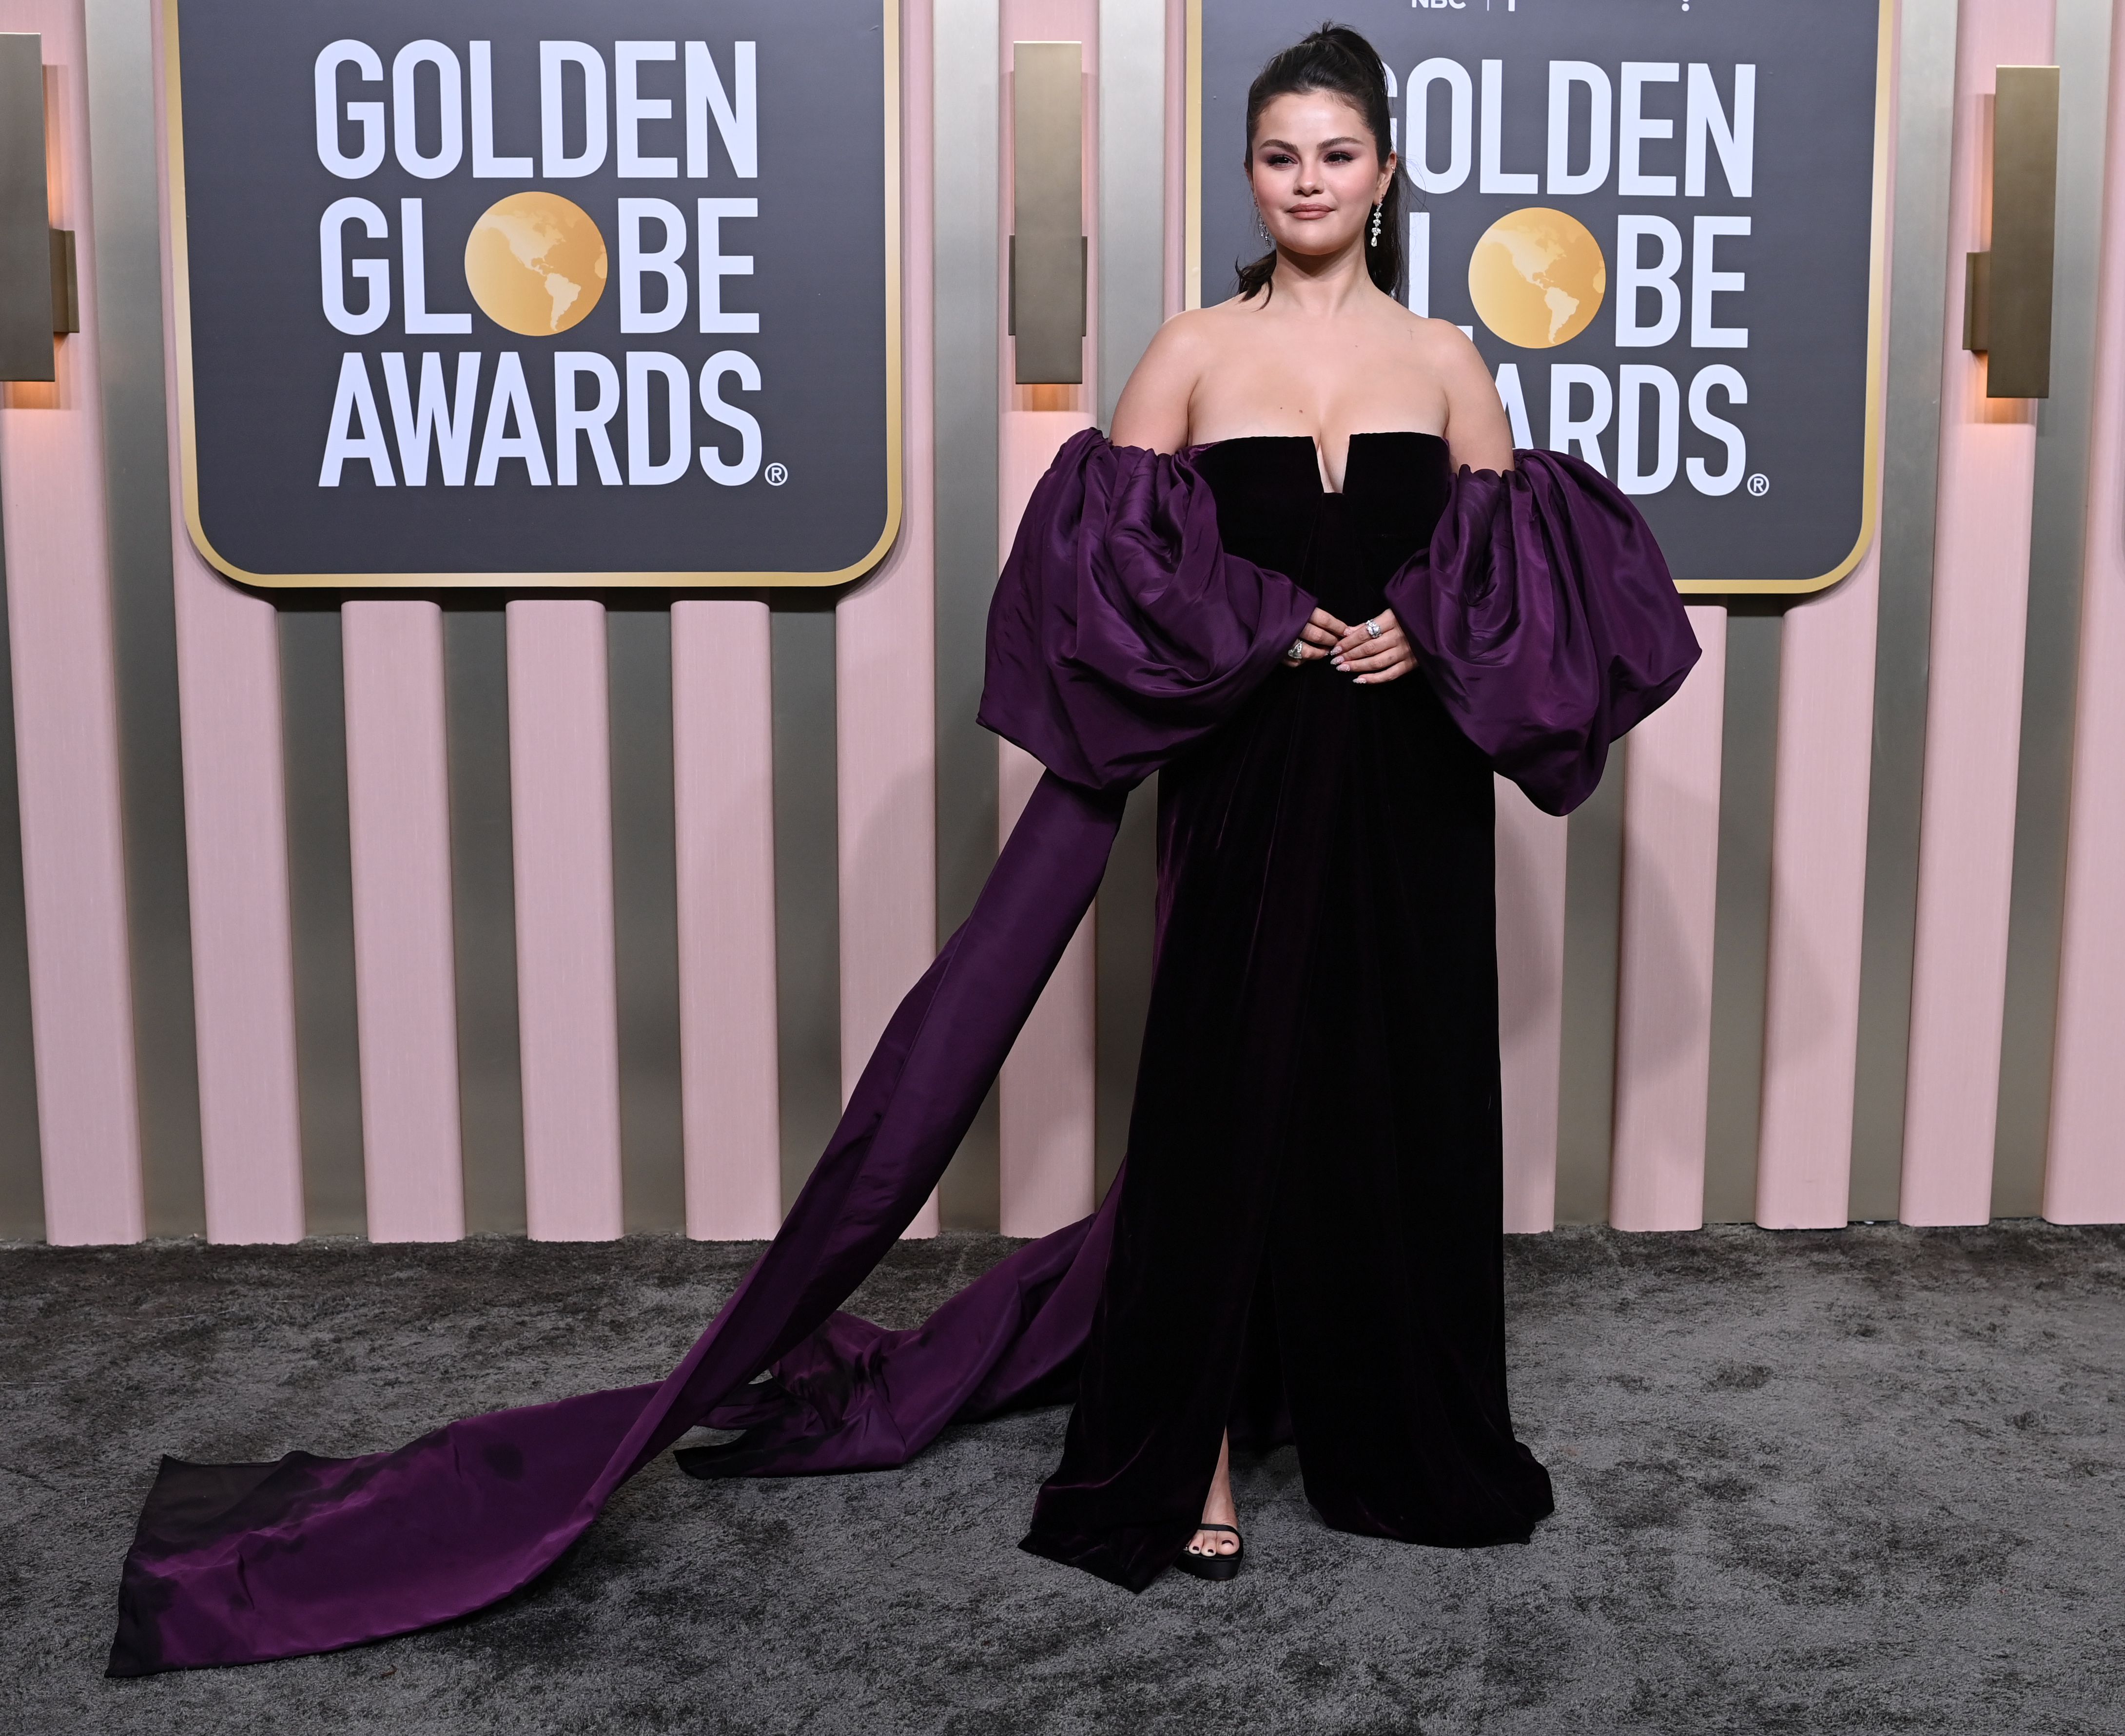 Selena Gomez Wears Louis Vuitton at the Met Gala 2016